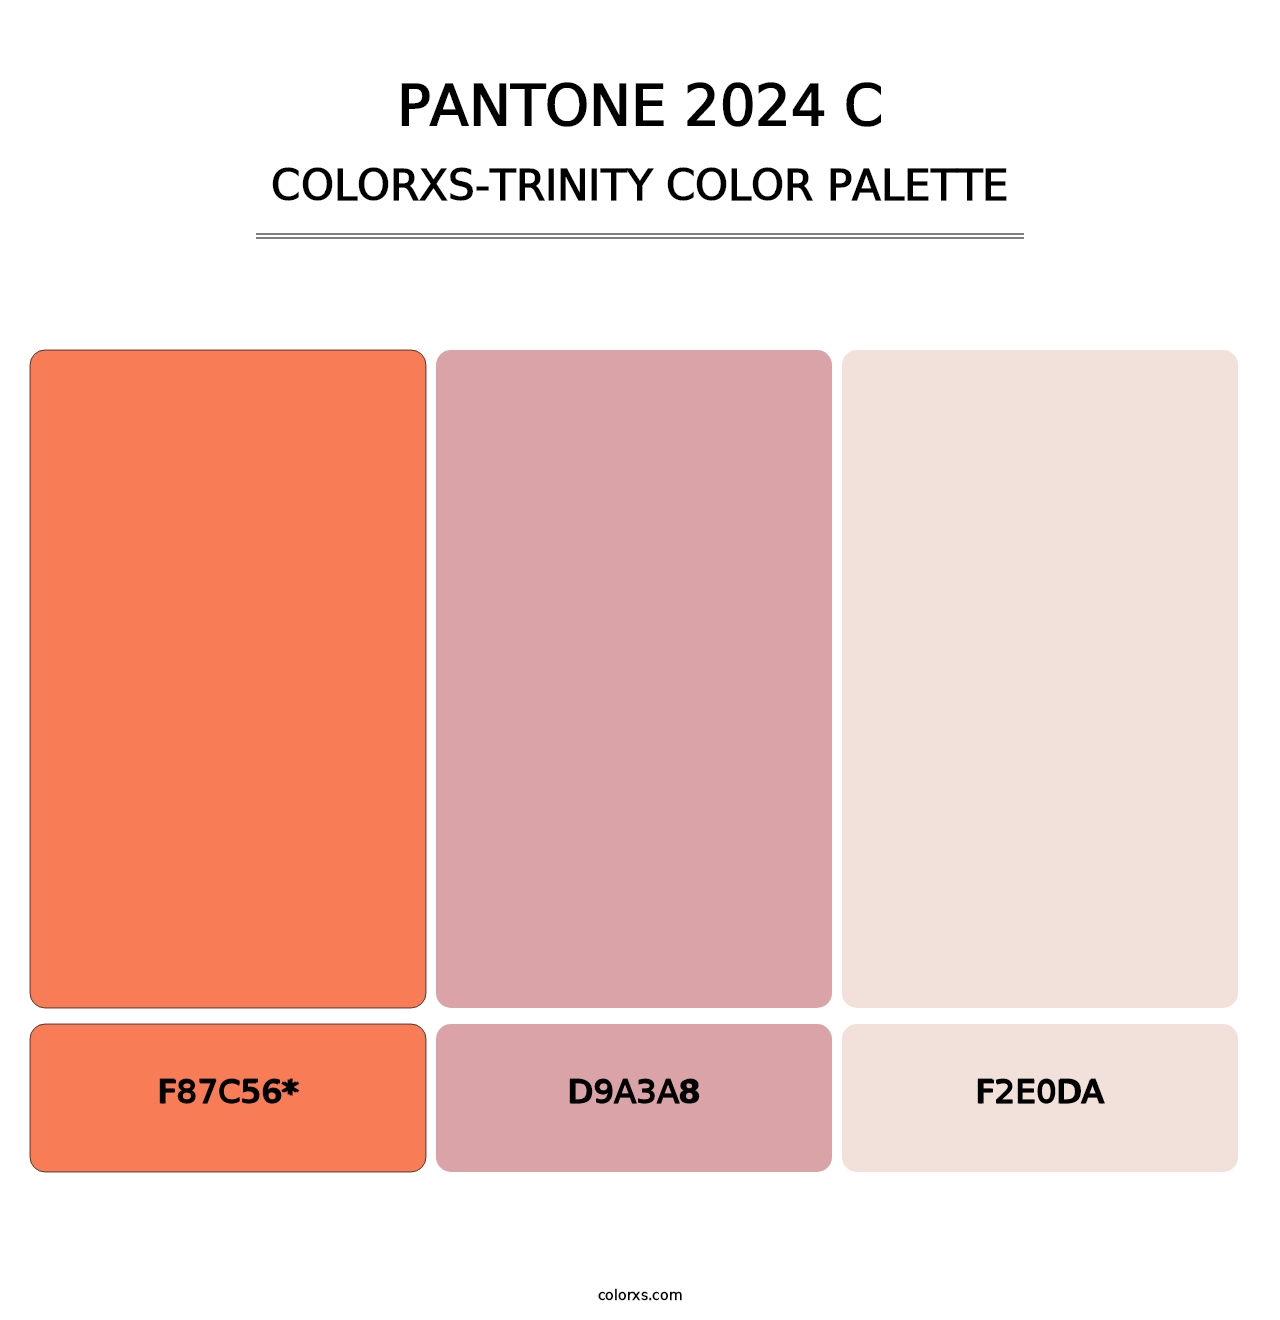 PANTONE 2024 C - Colorxs Trinity Palette